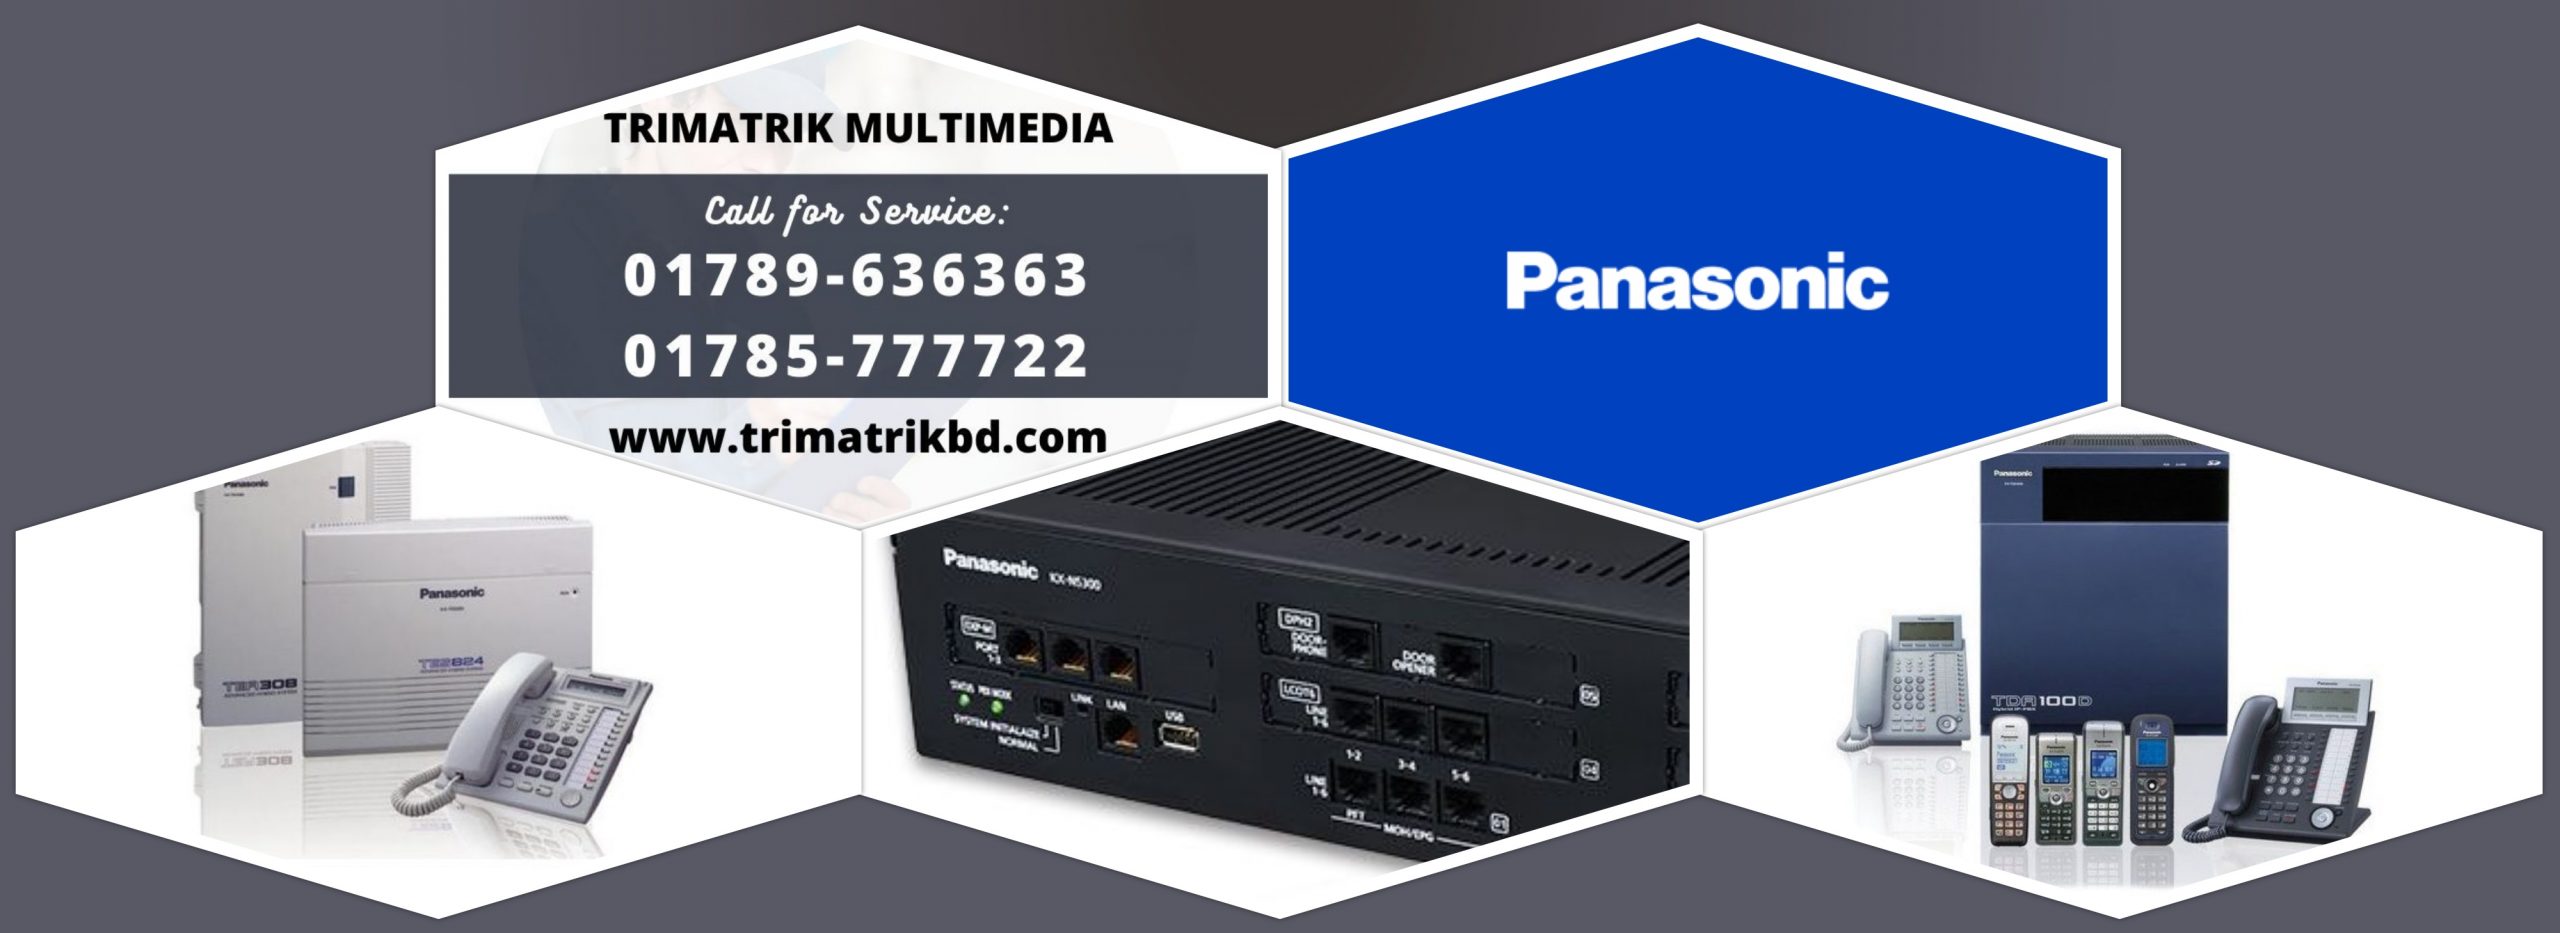 Panasonic Distributor in Bangladesh, TRIMATRIK MUltimedia